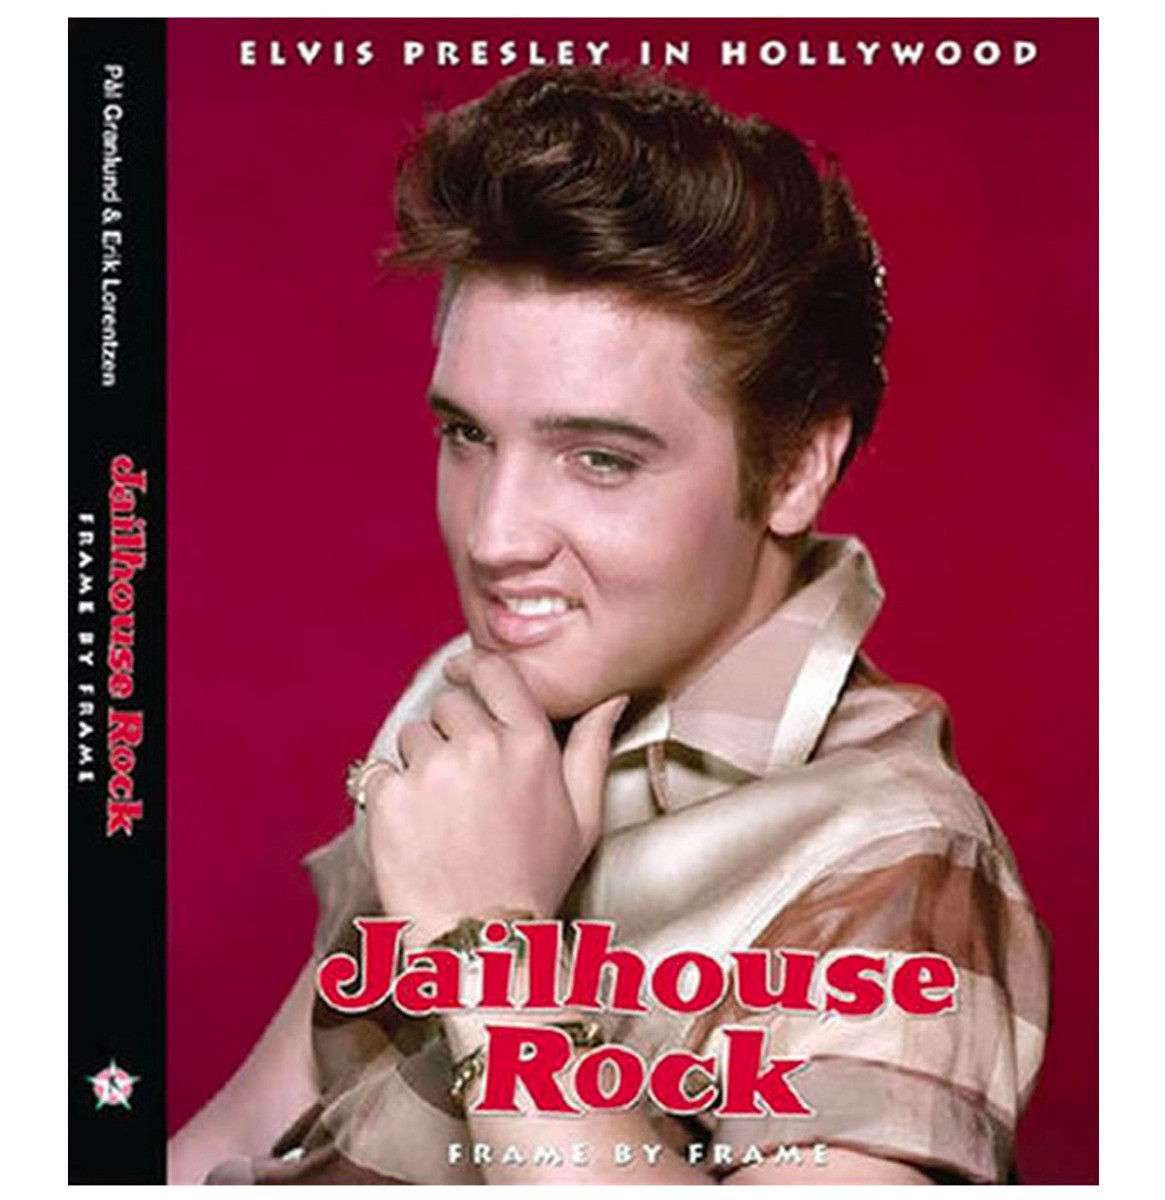 Elvis Presley Jailhouse Rock Frame By Frame Deluxe Hardcover Boek